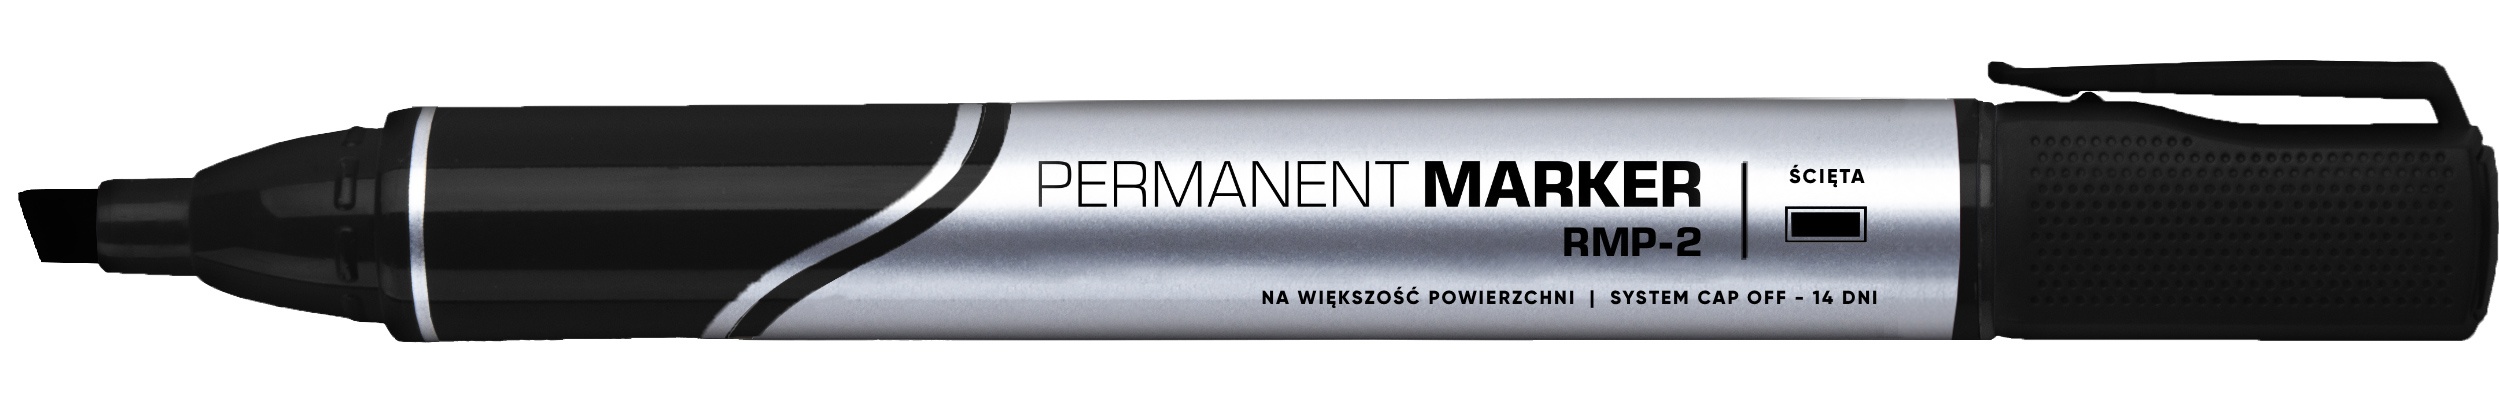 RMP-2 Permanent Marker